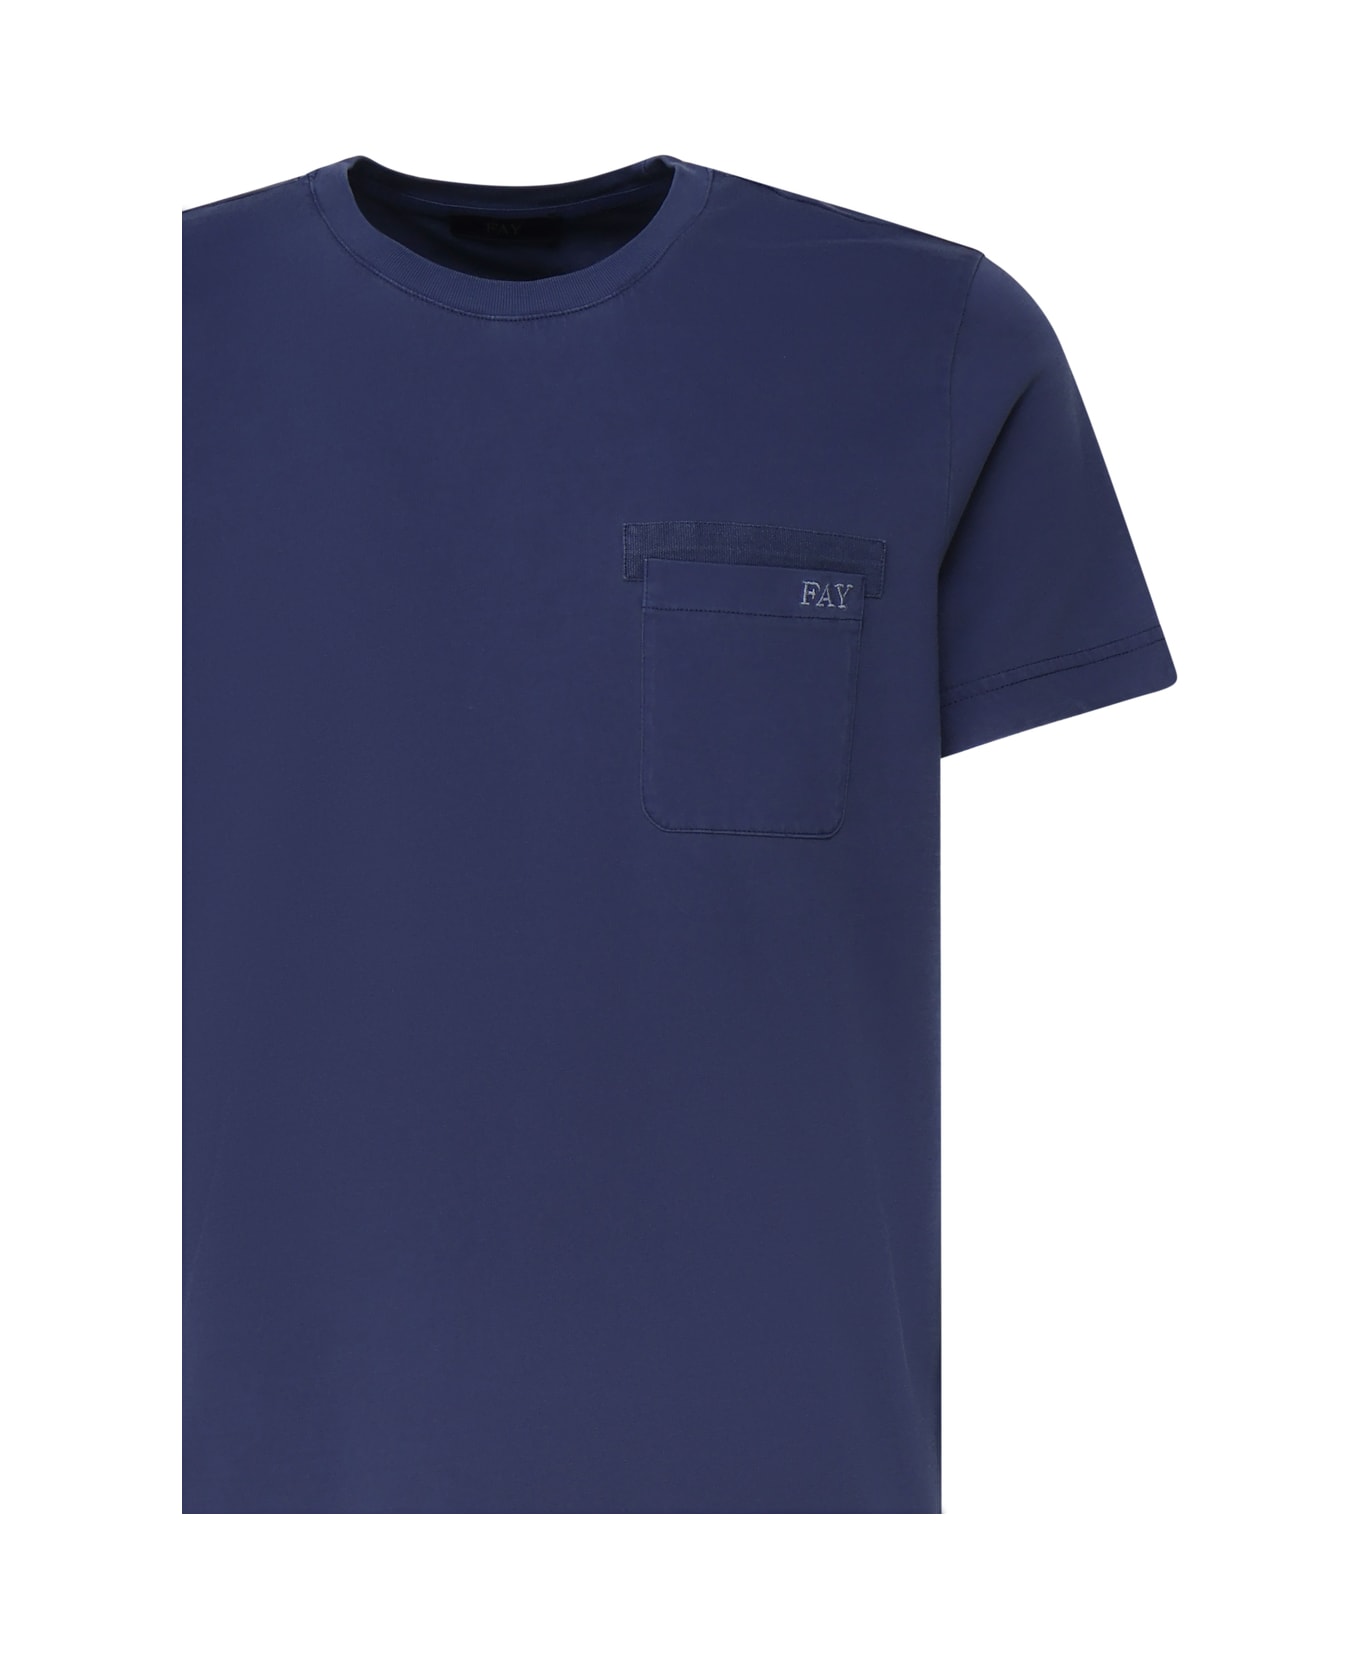 Fay T-shirt With Pocket シャツ